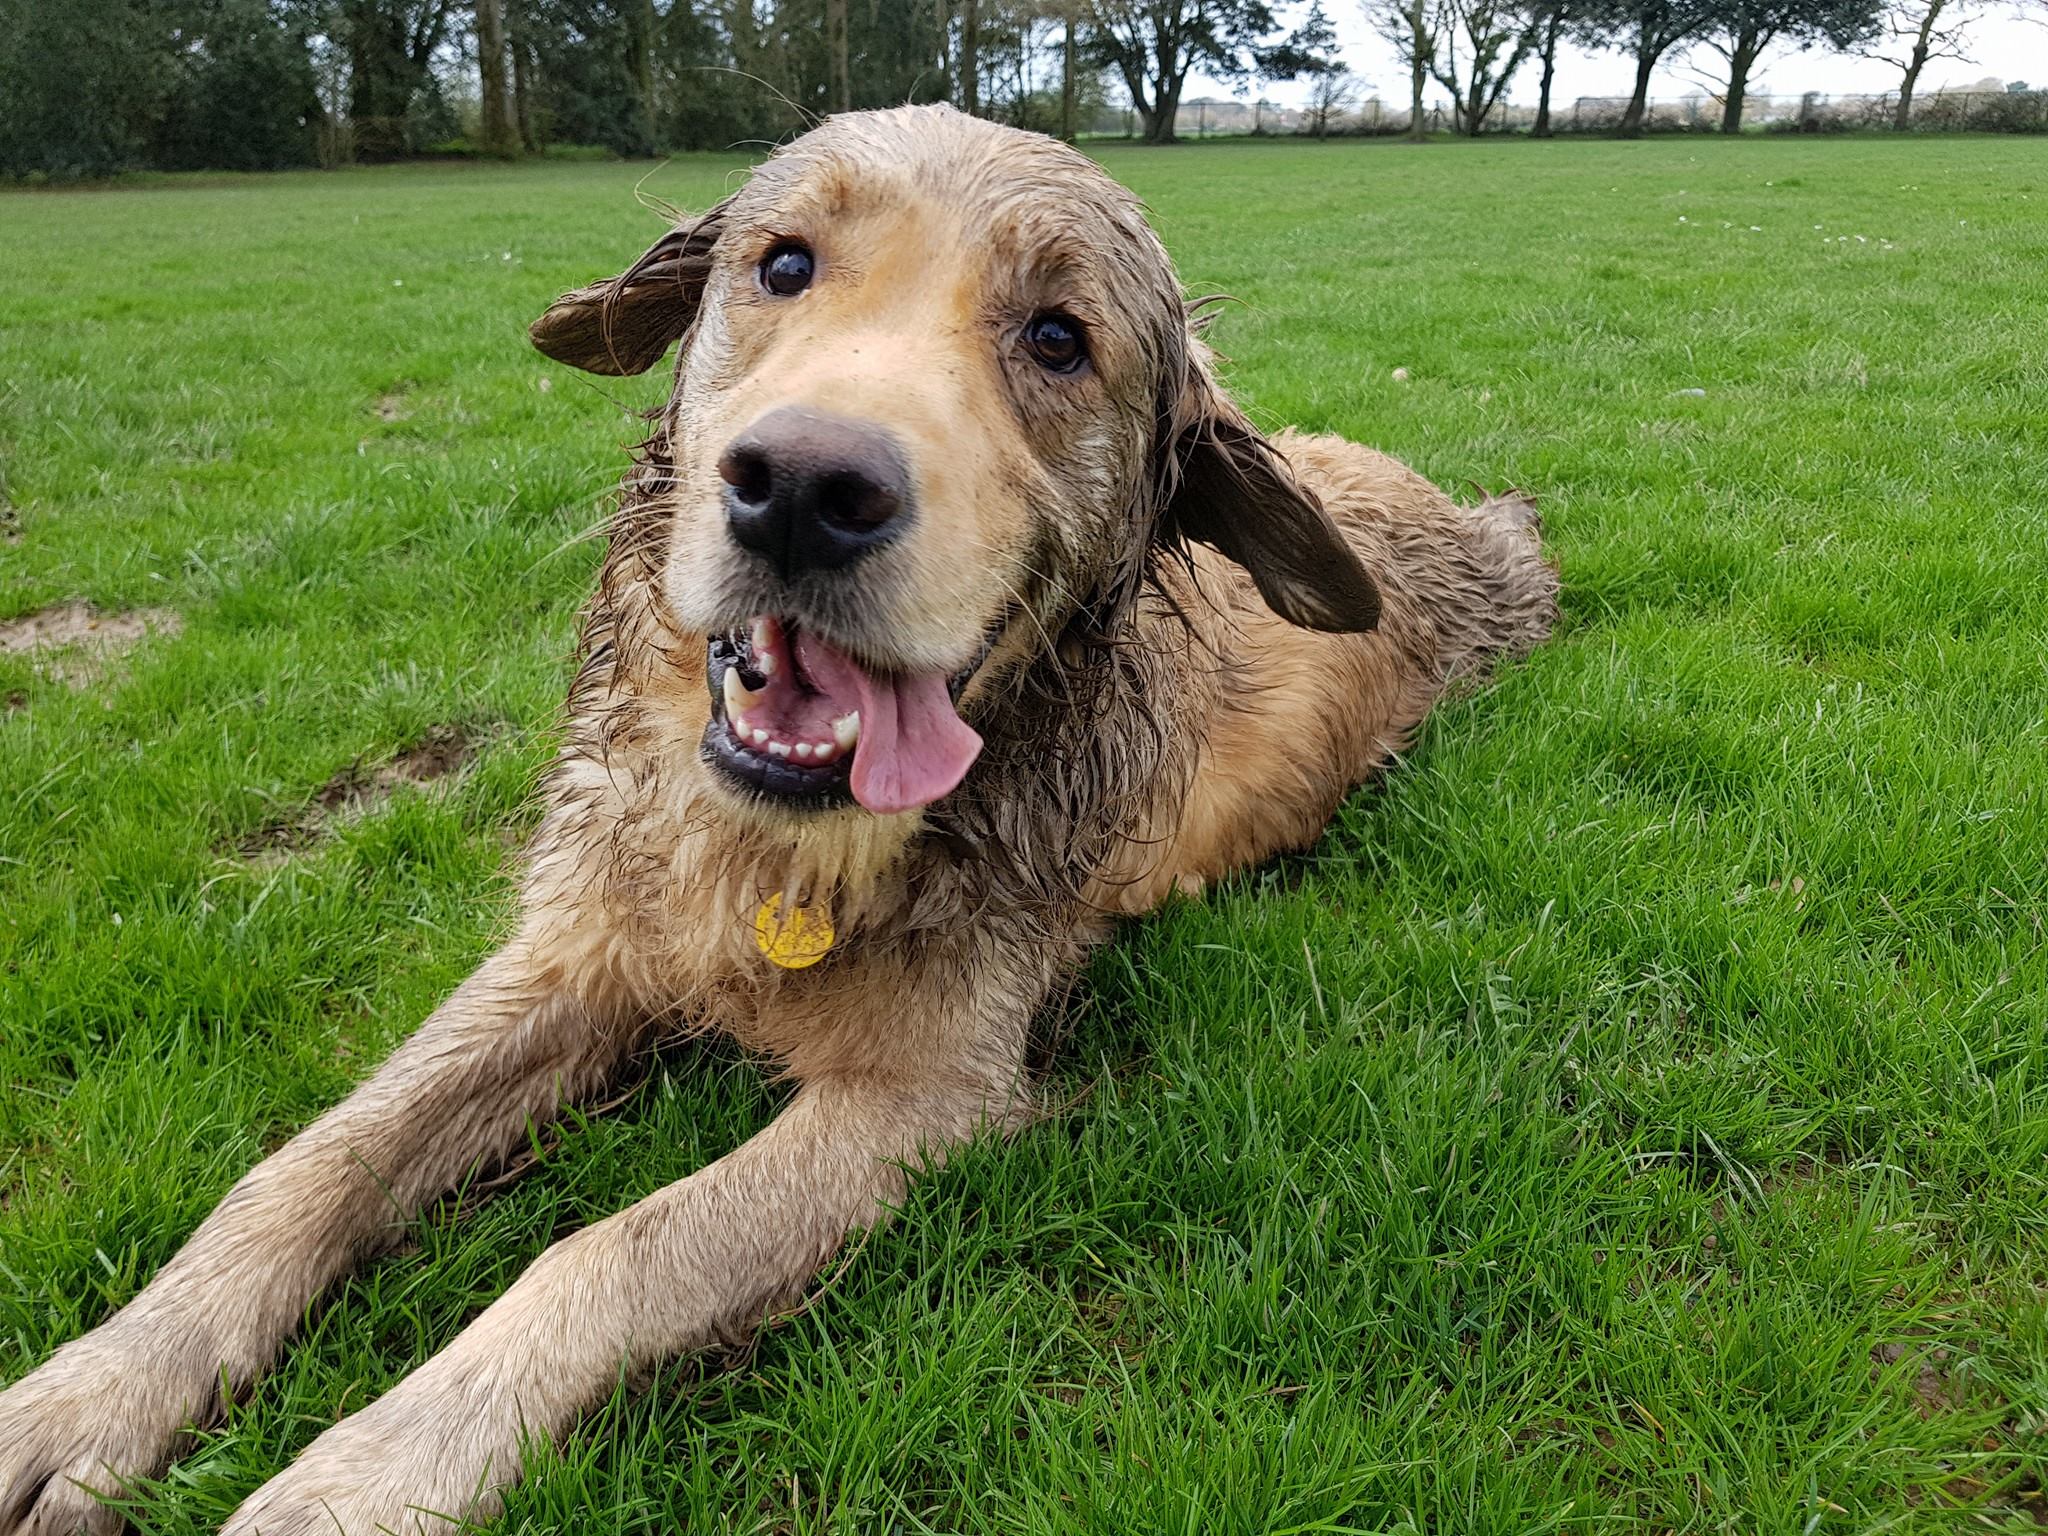 A muddy dog having lots of fun